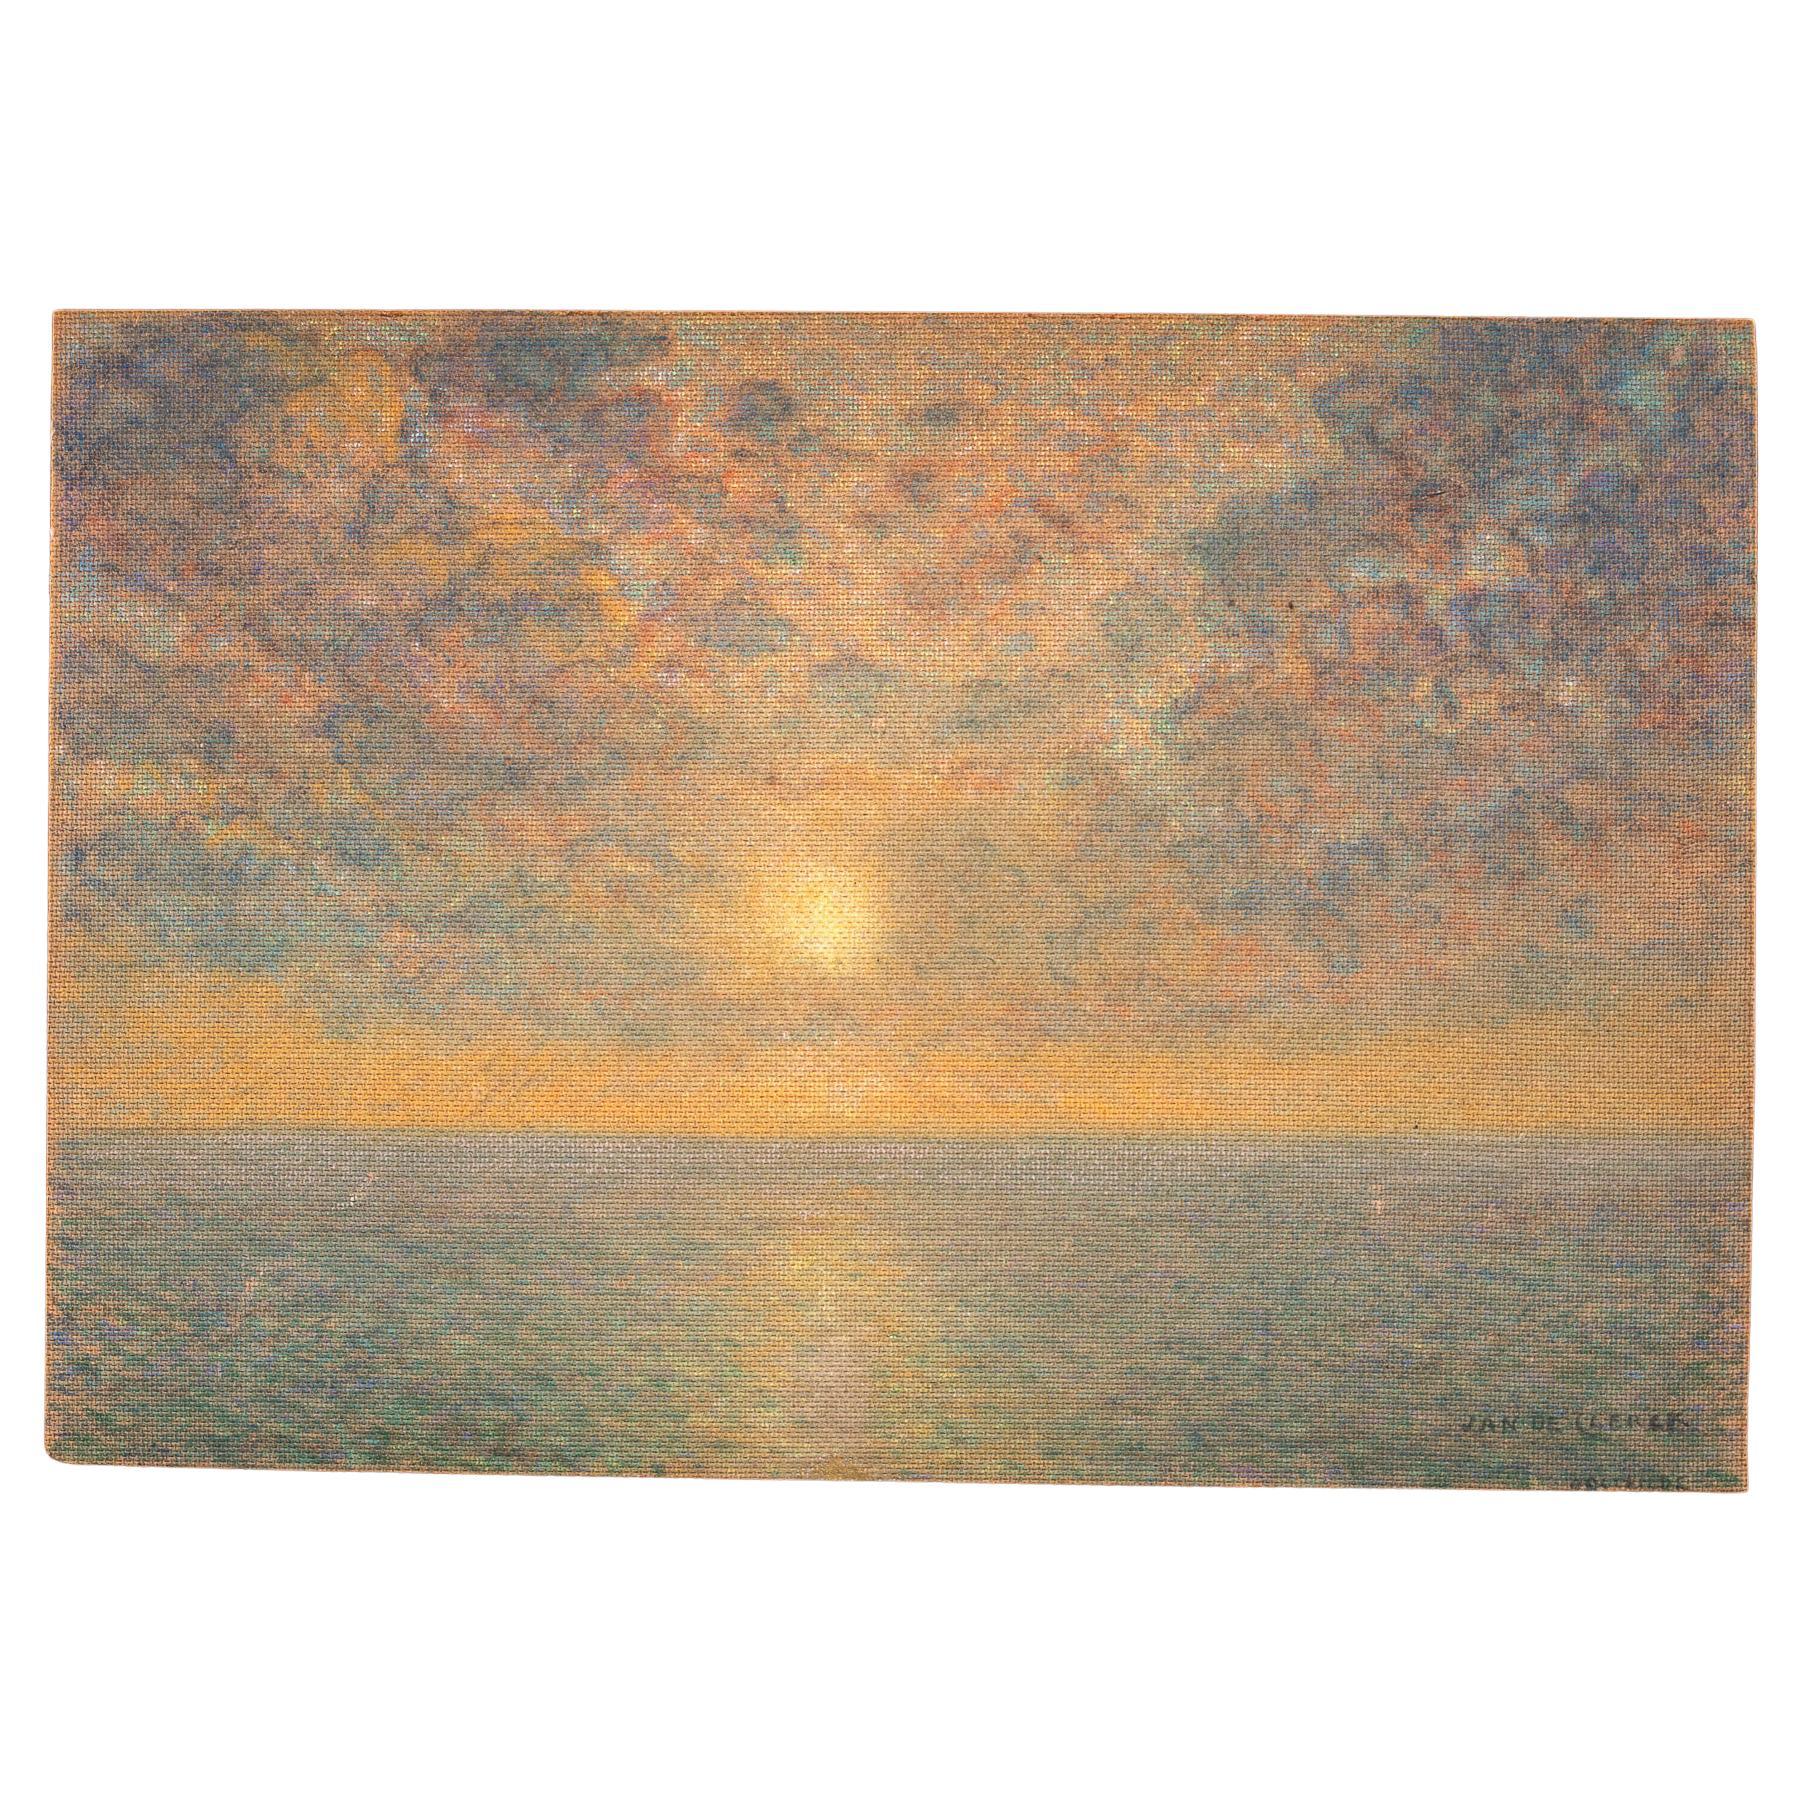 Sunset over the Sea, Jan de Clerck '1891-1964' For Sale